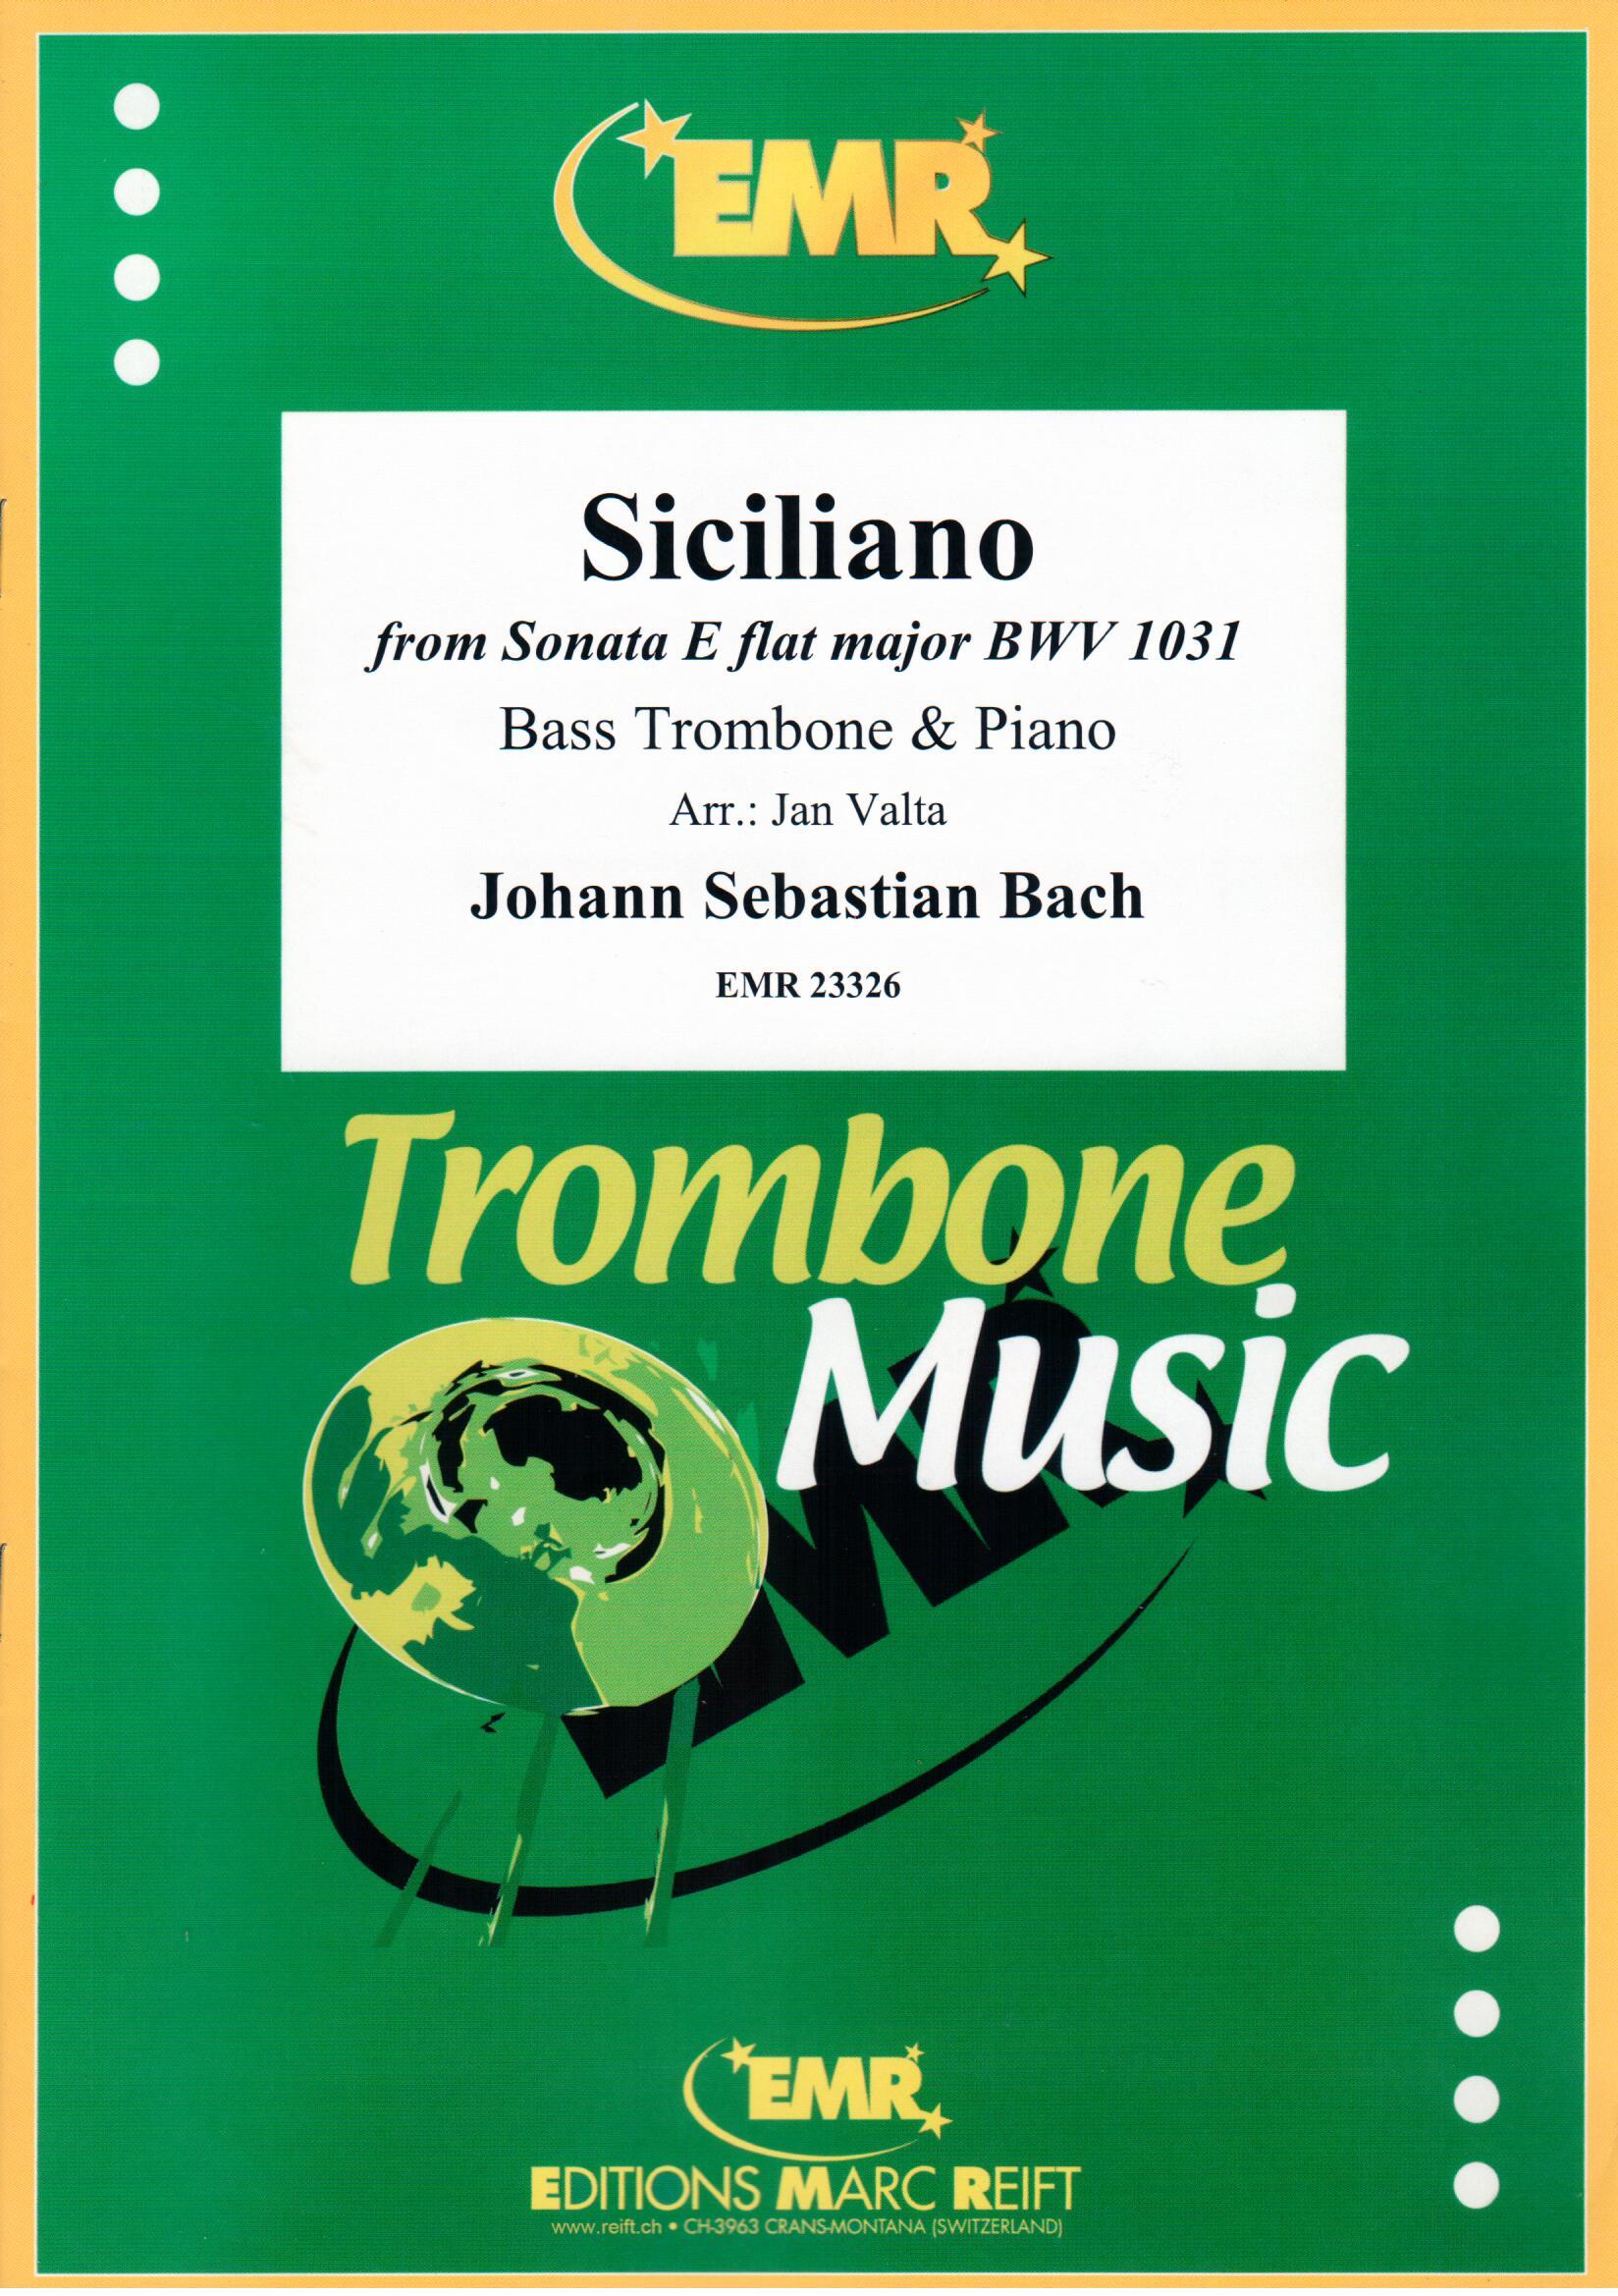 SICILIANO, EMR Bass Trombone